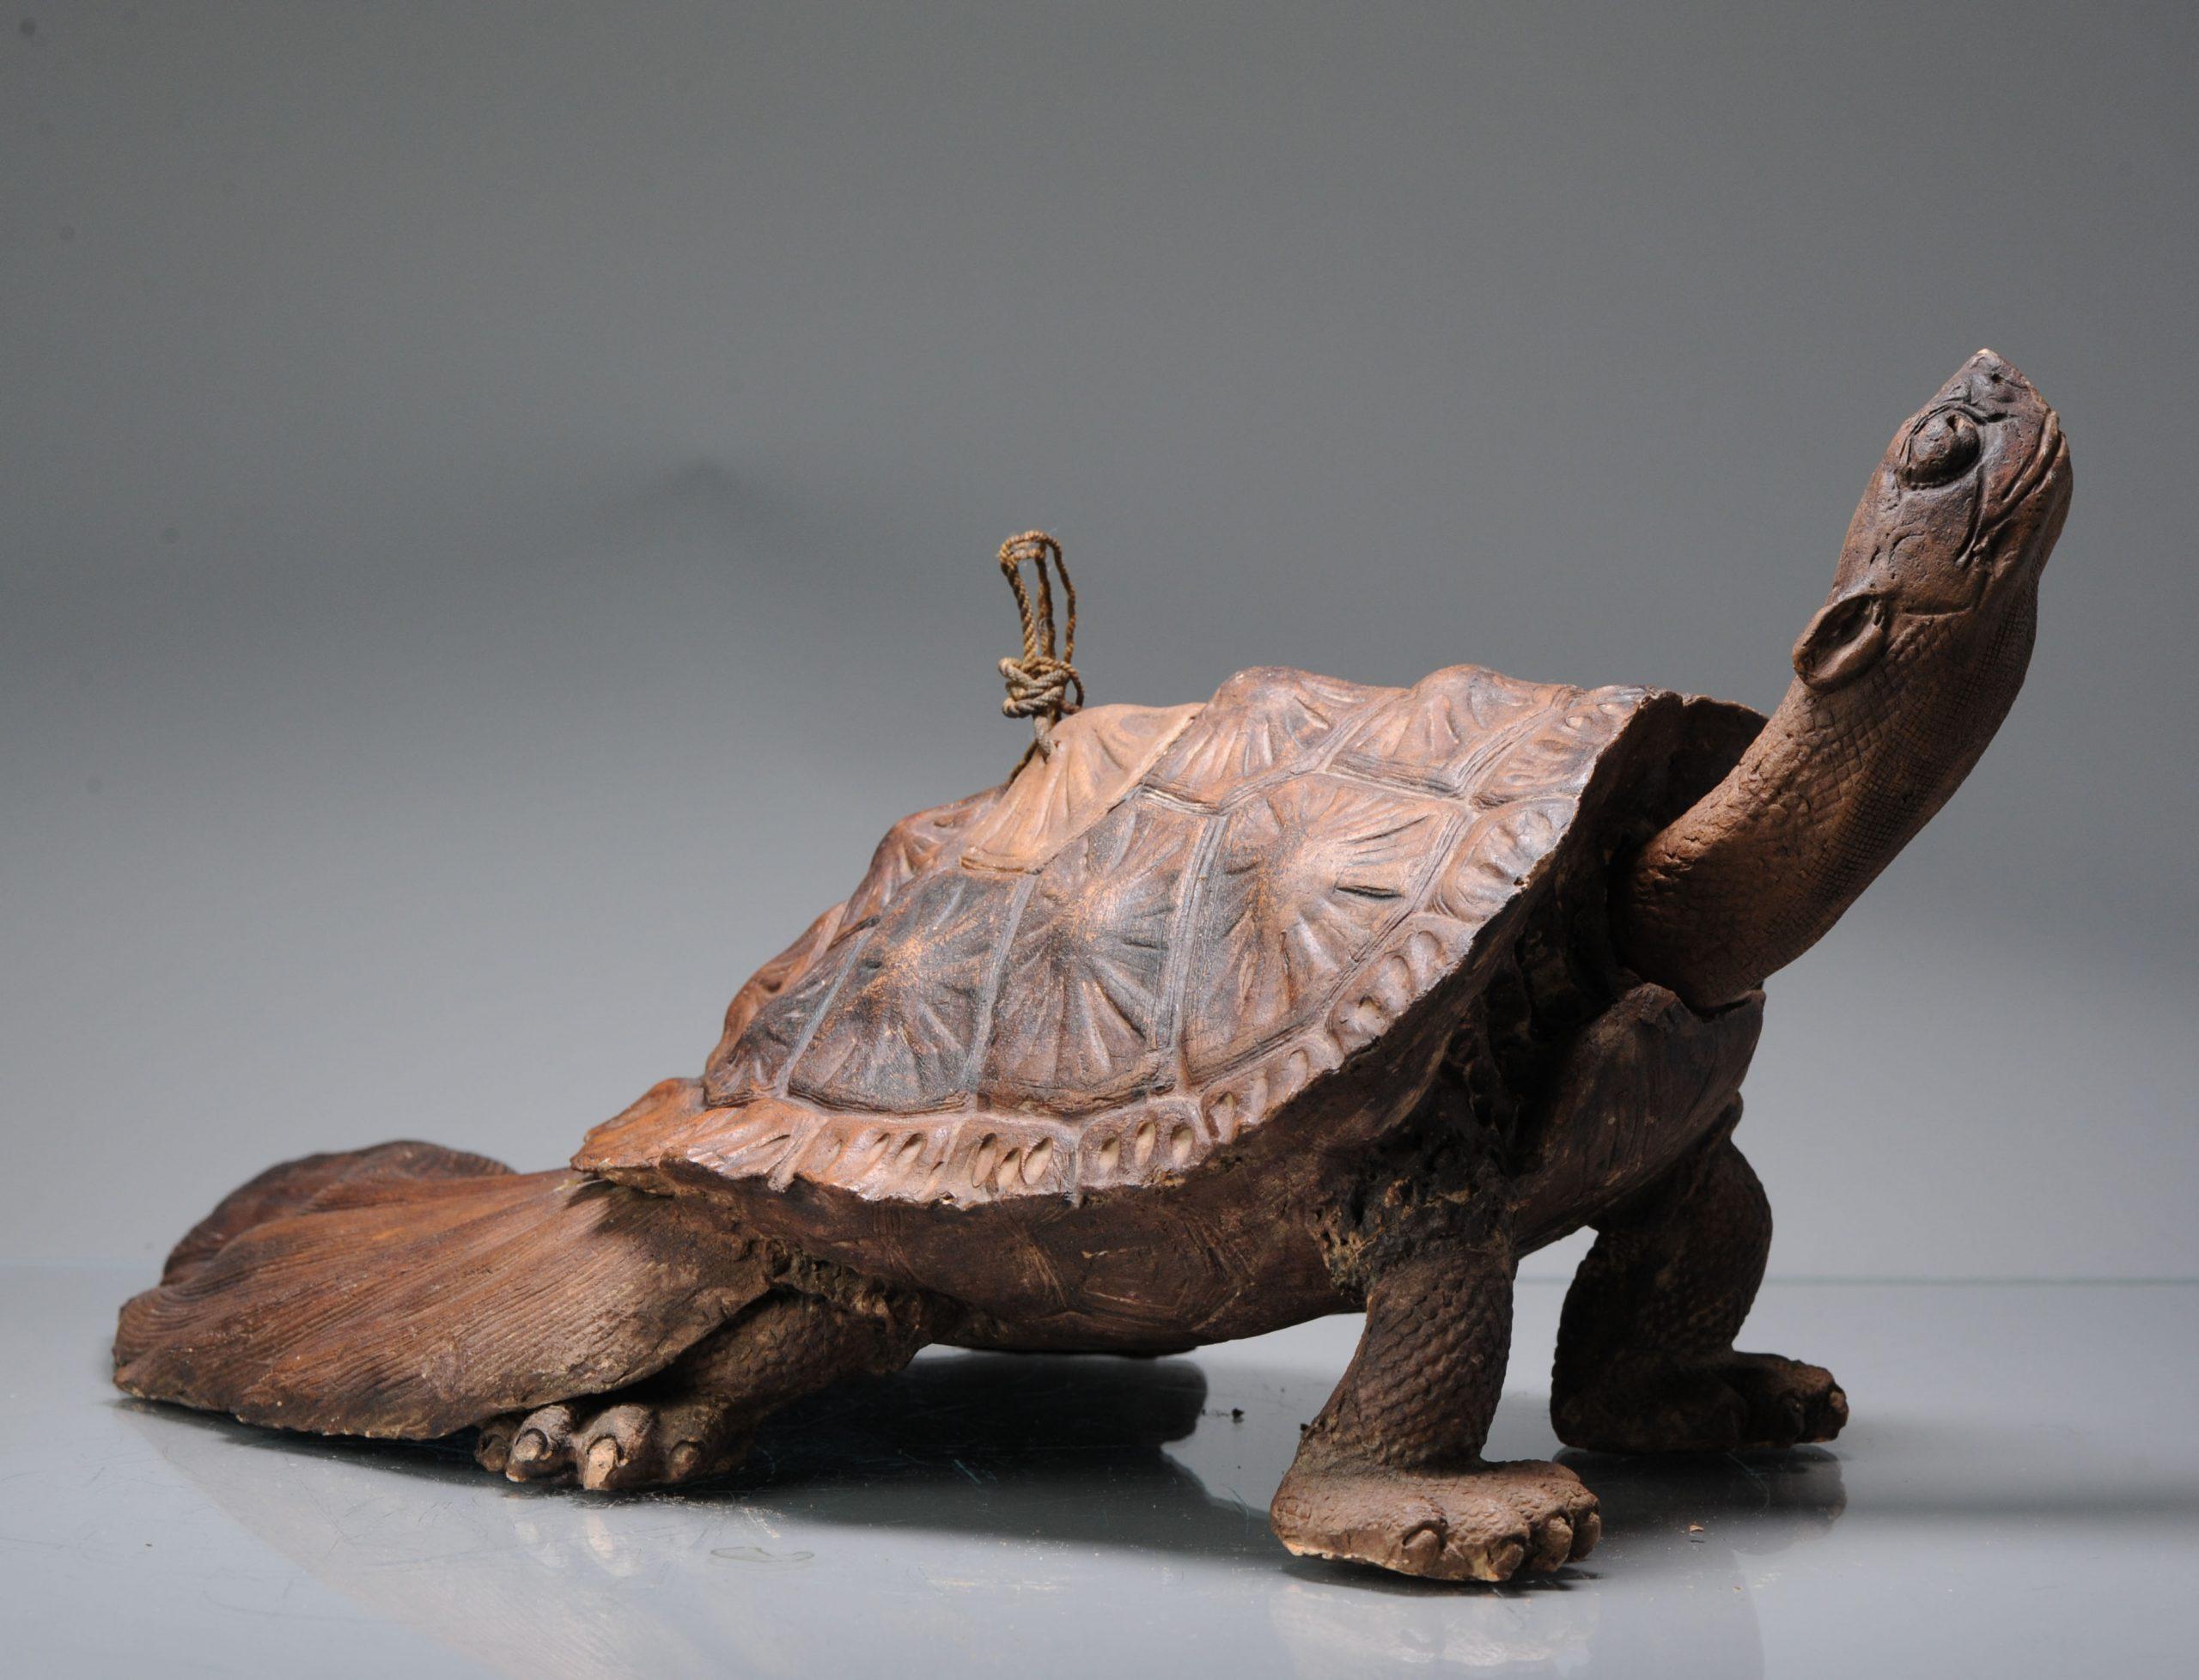 Antique Iwayaki Earthenware Edo Incense Burner of a Turtle 19th Century Japan For Sale 2